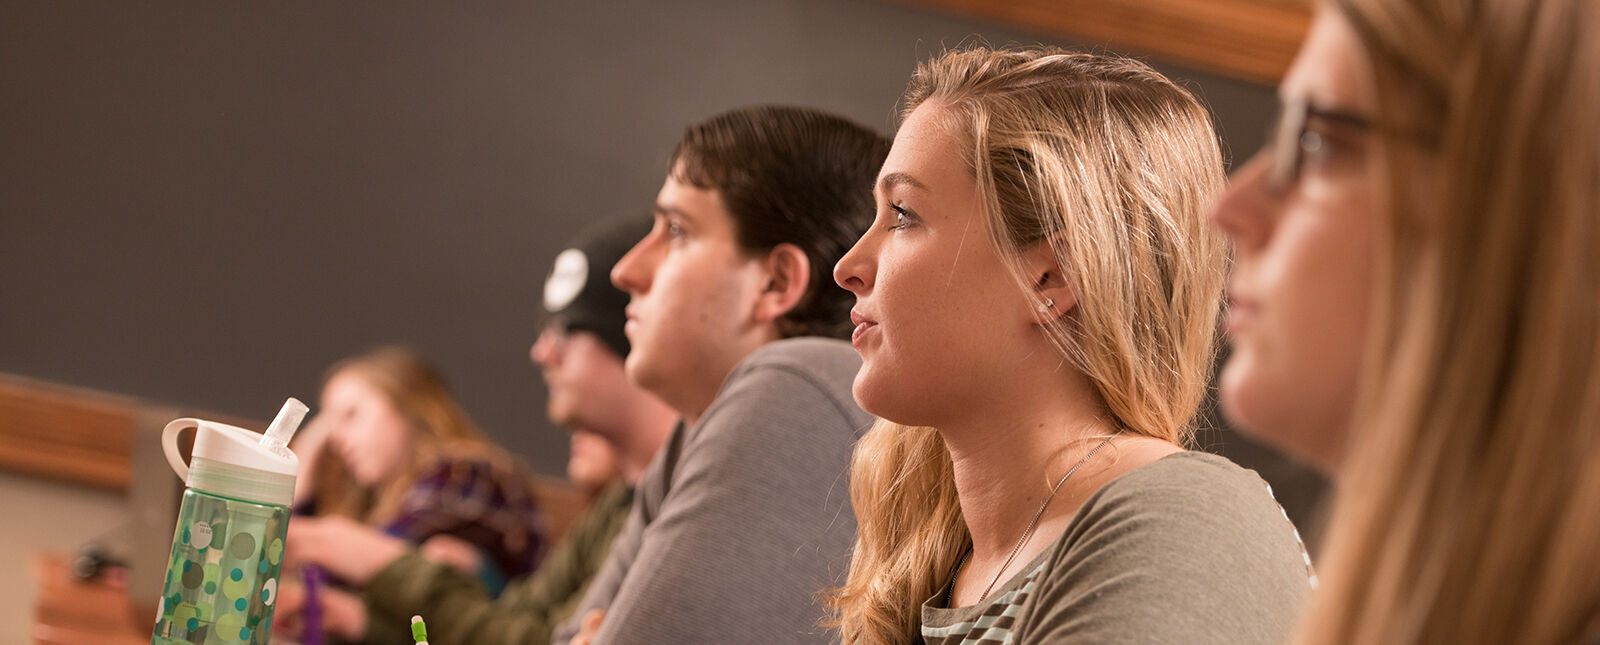 Students listen in class